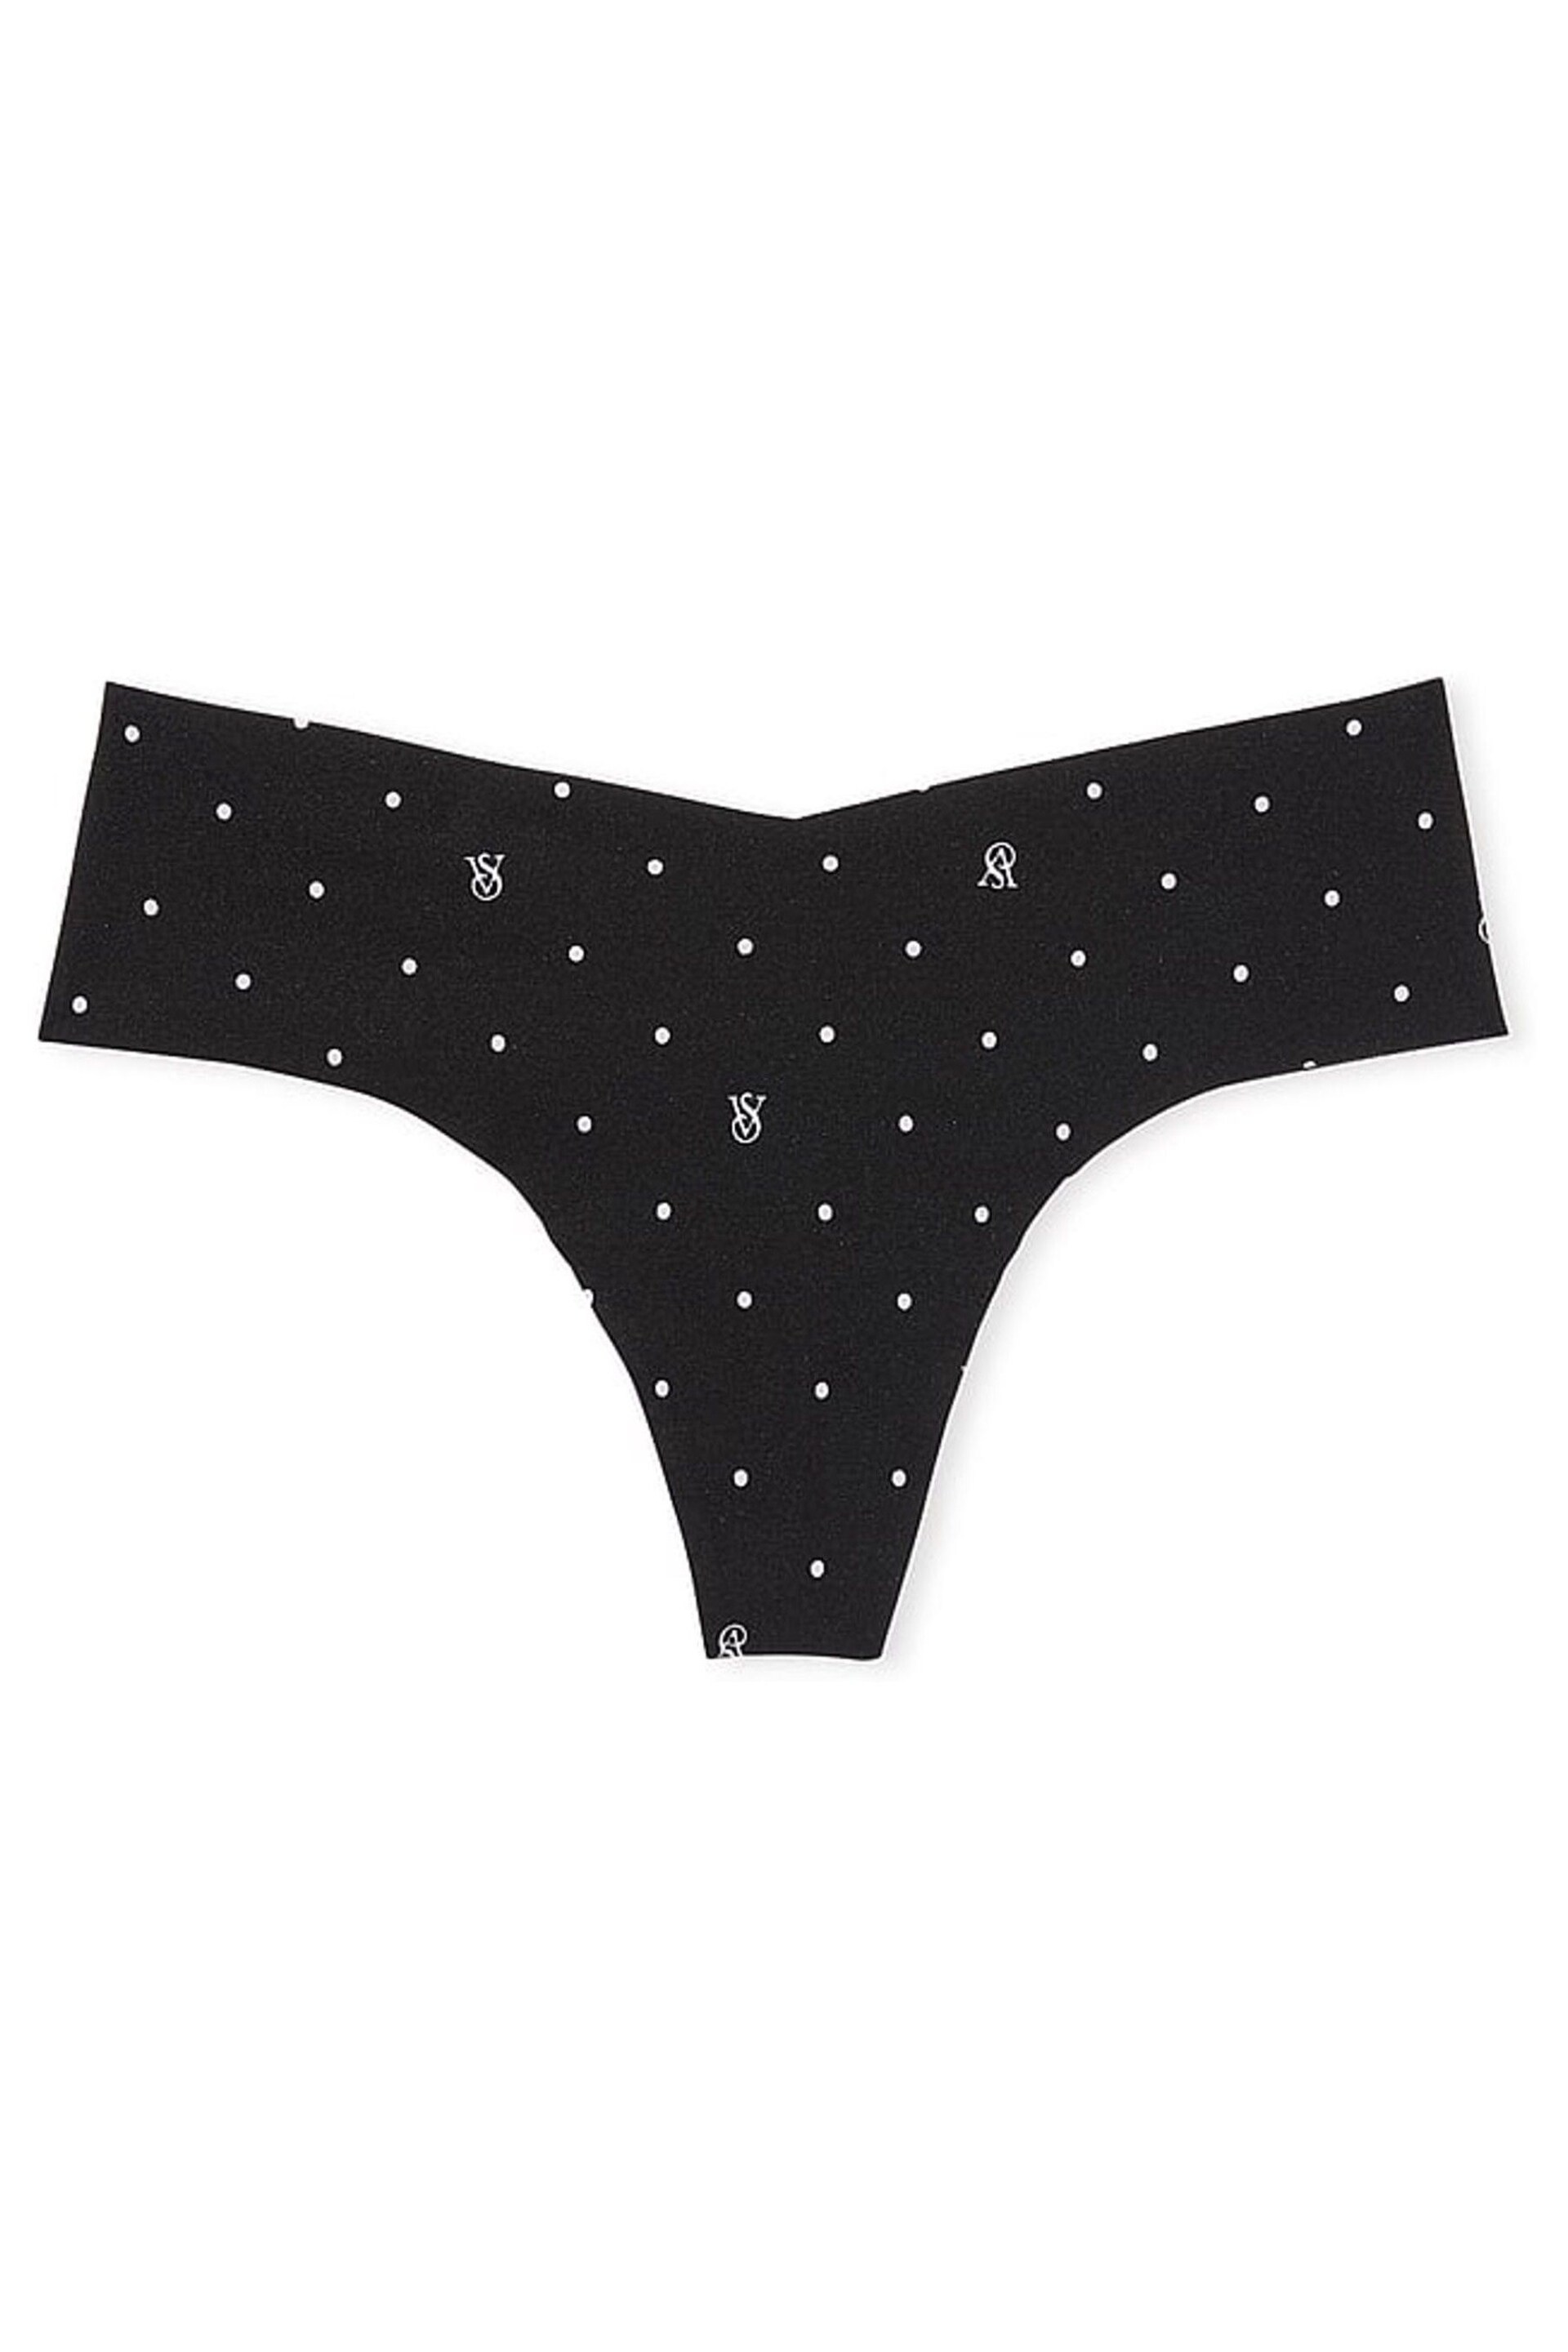 Victoria's Secret Black Dot Logo Thong Knickers - Image 3 of 3